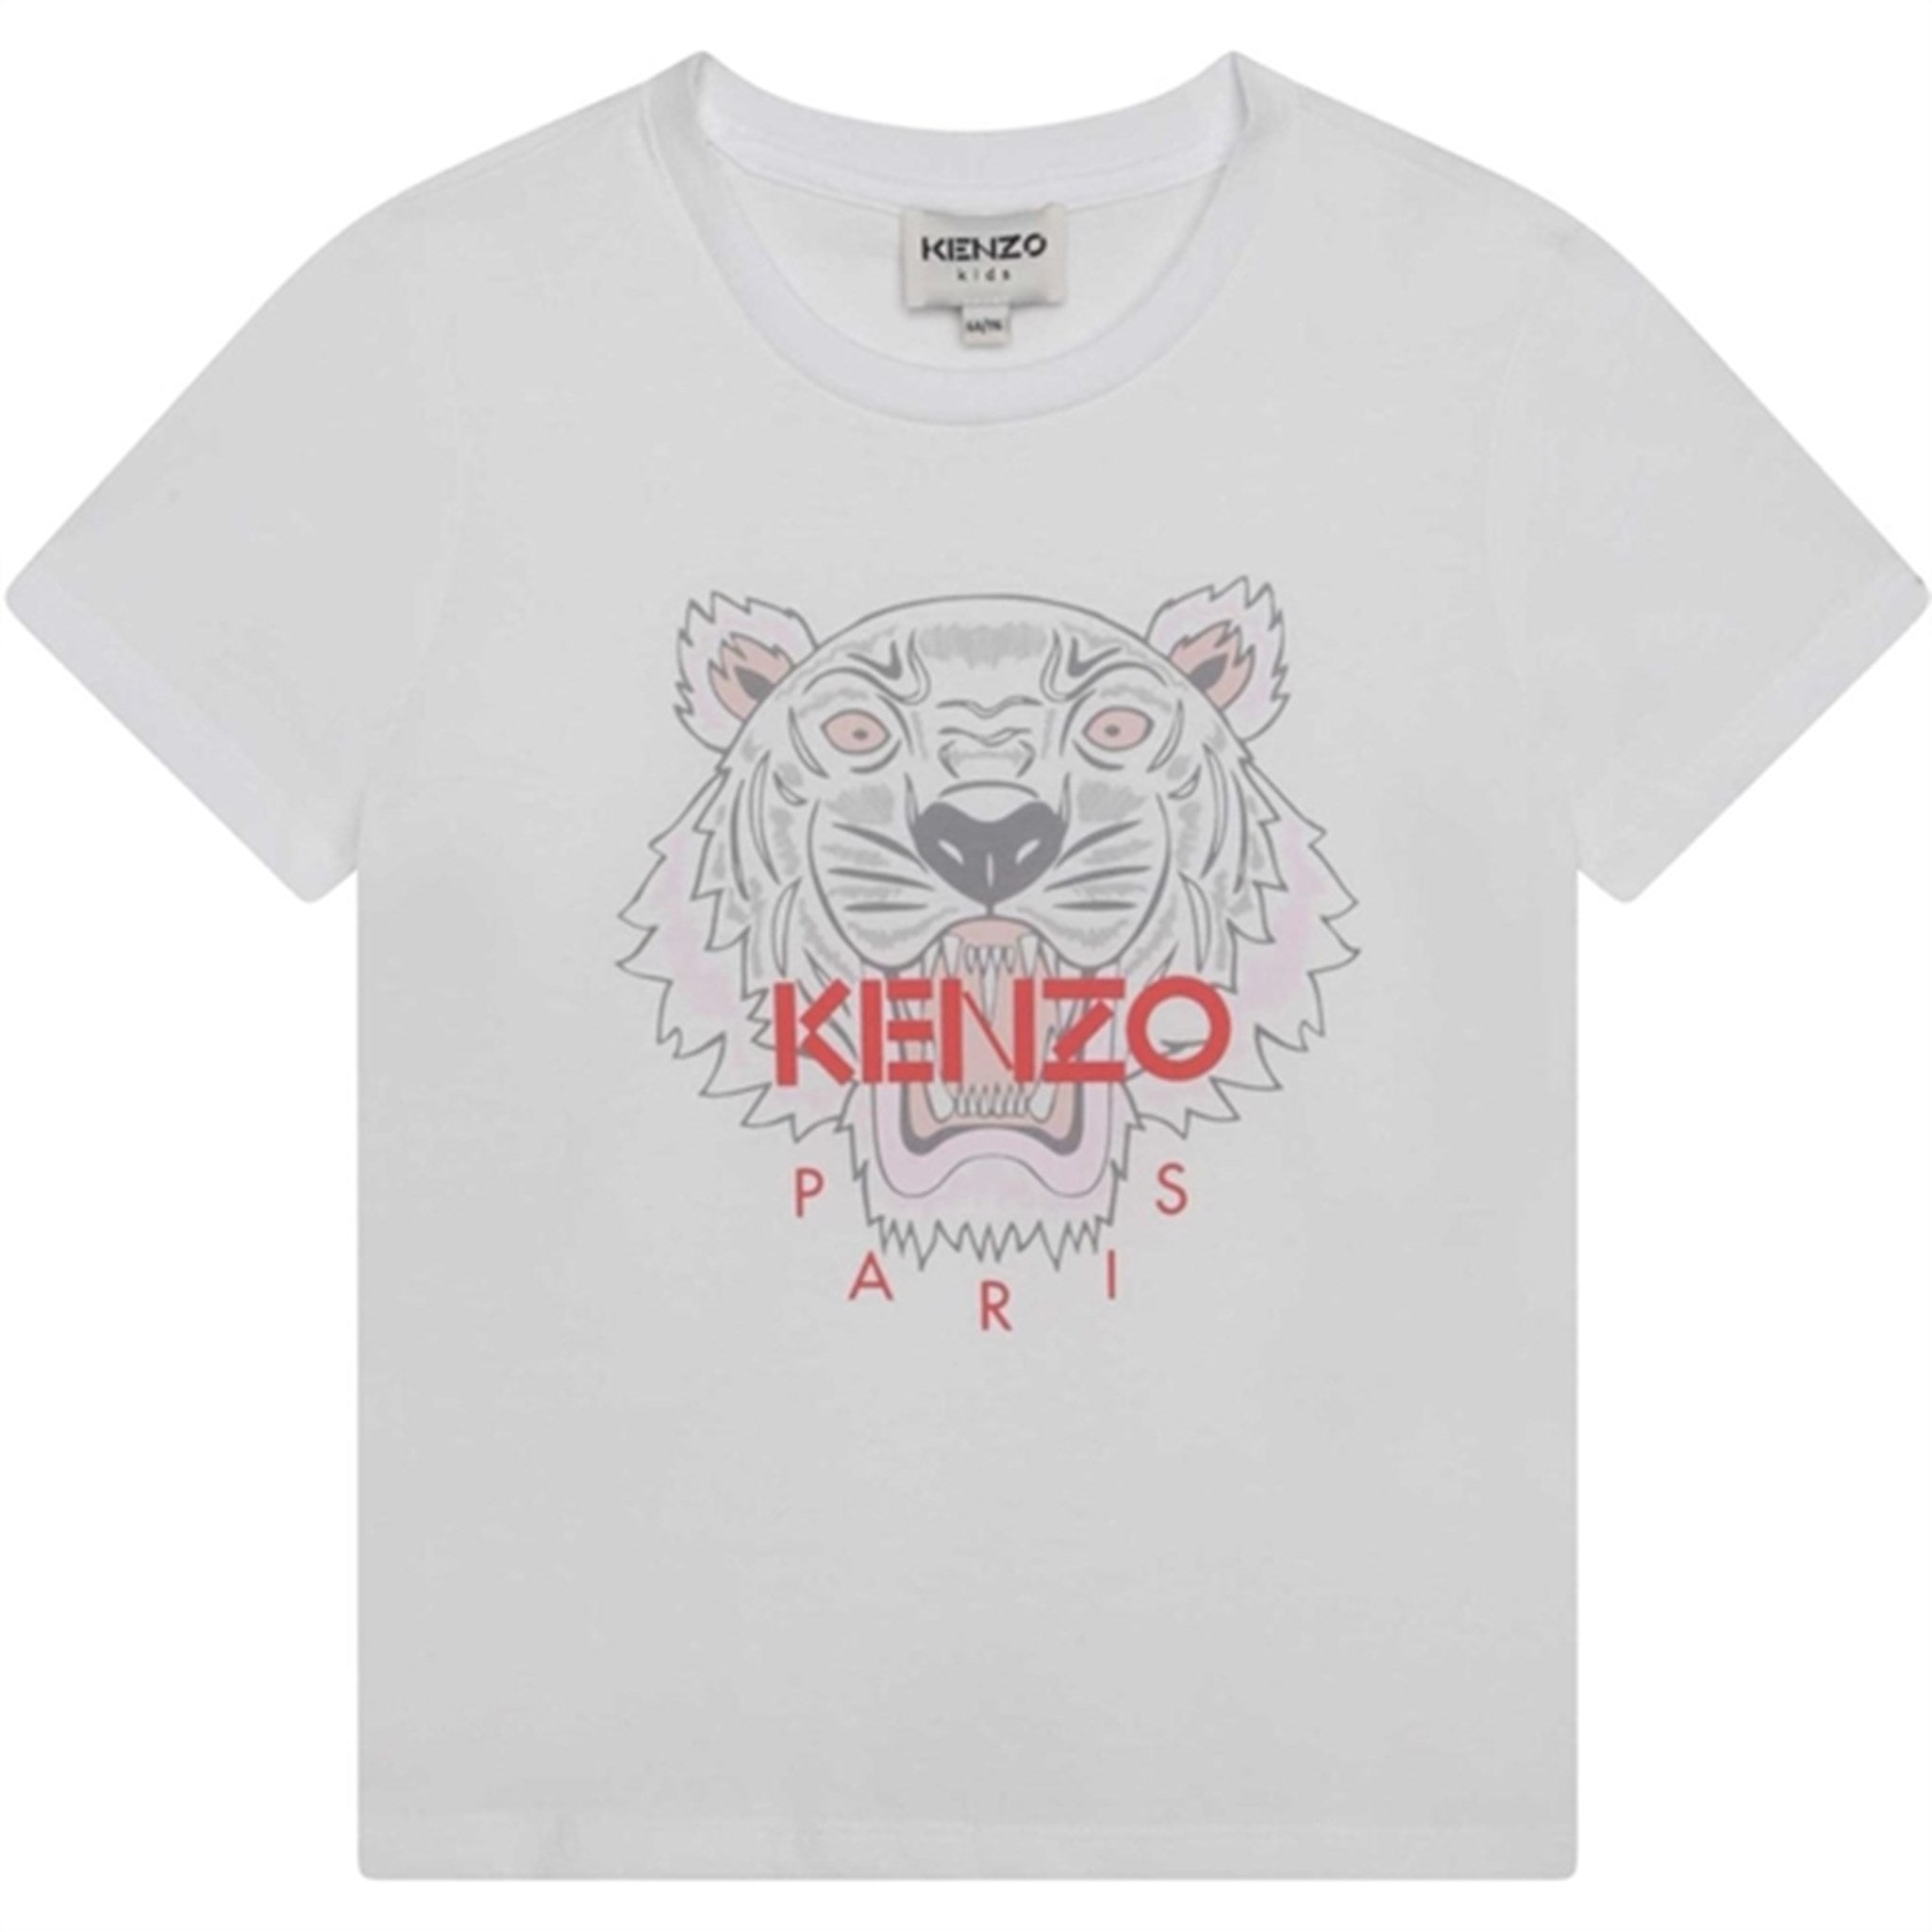 Kenzo T-shirt White Tiger